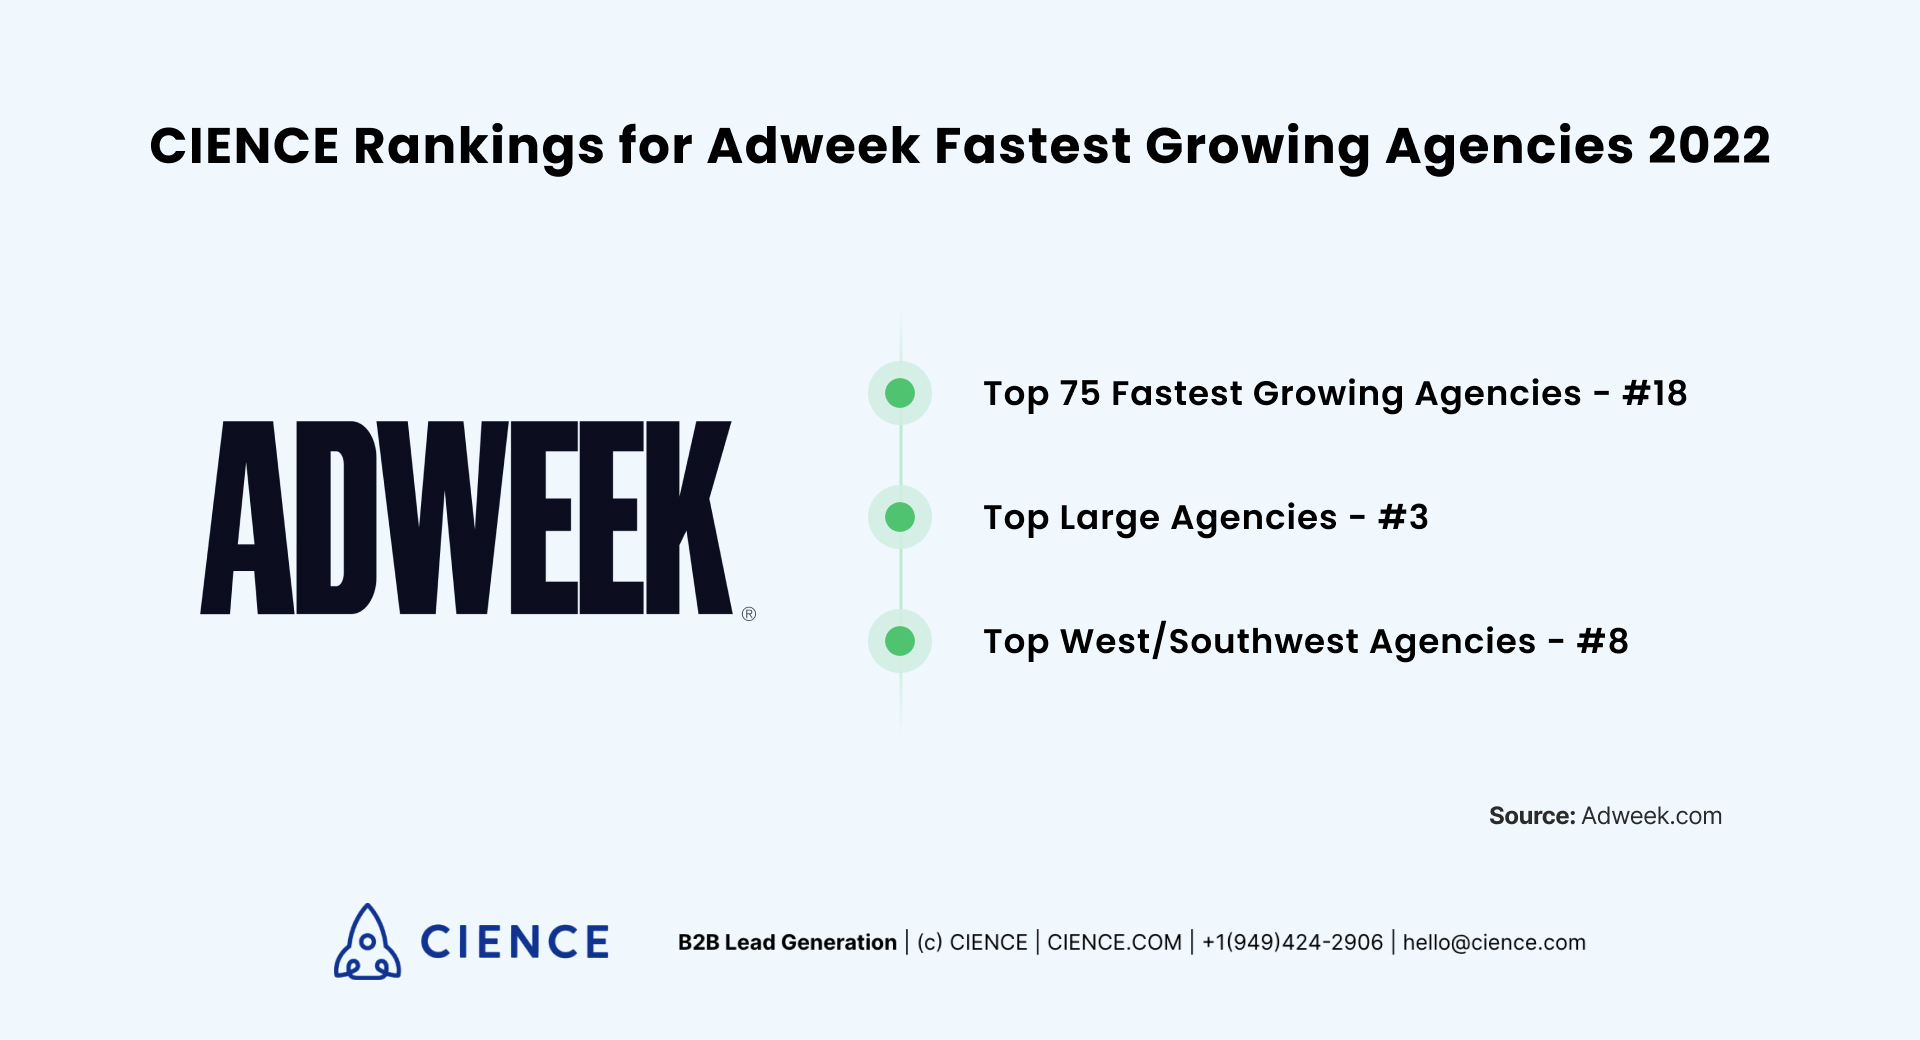 Adweek’s CIENCE Rankings for Fastest Growing Agencies of 2022